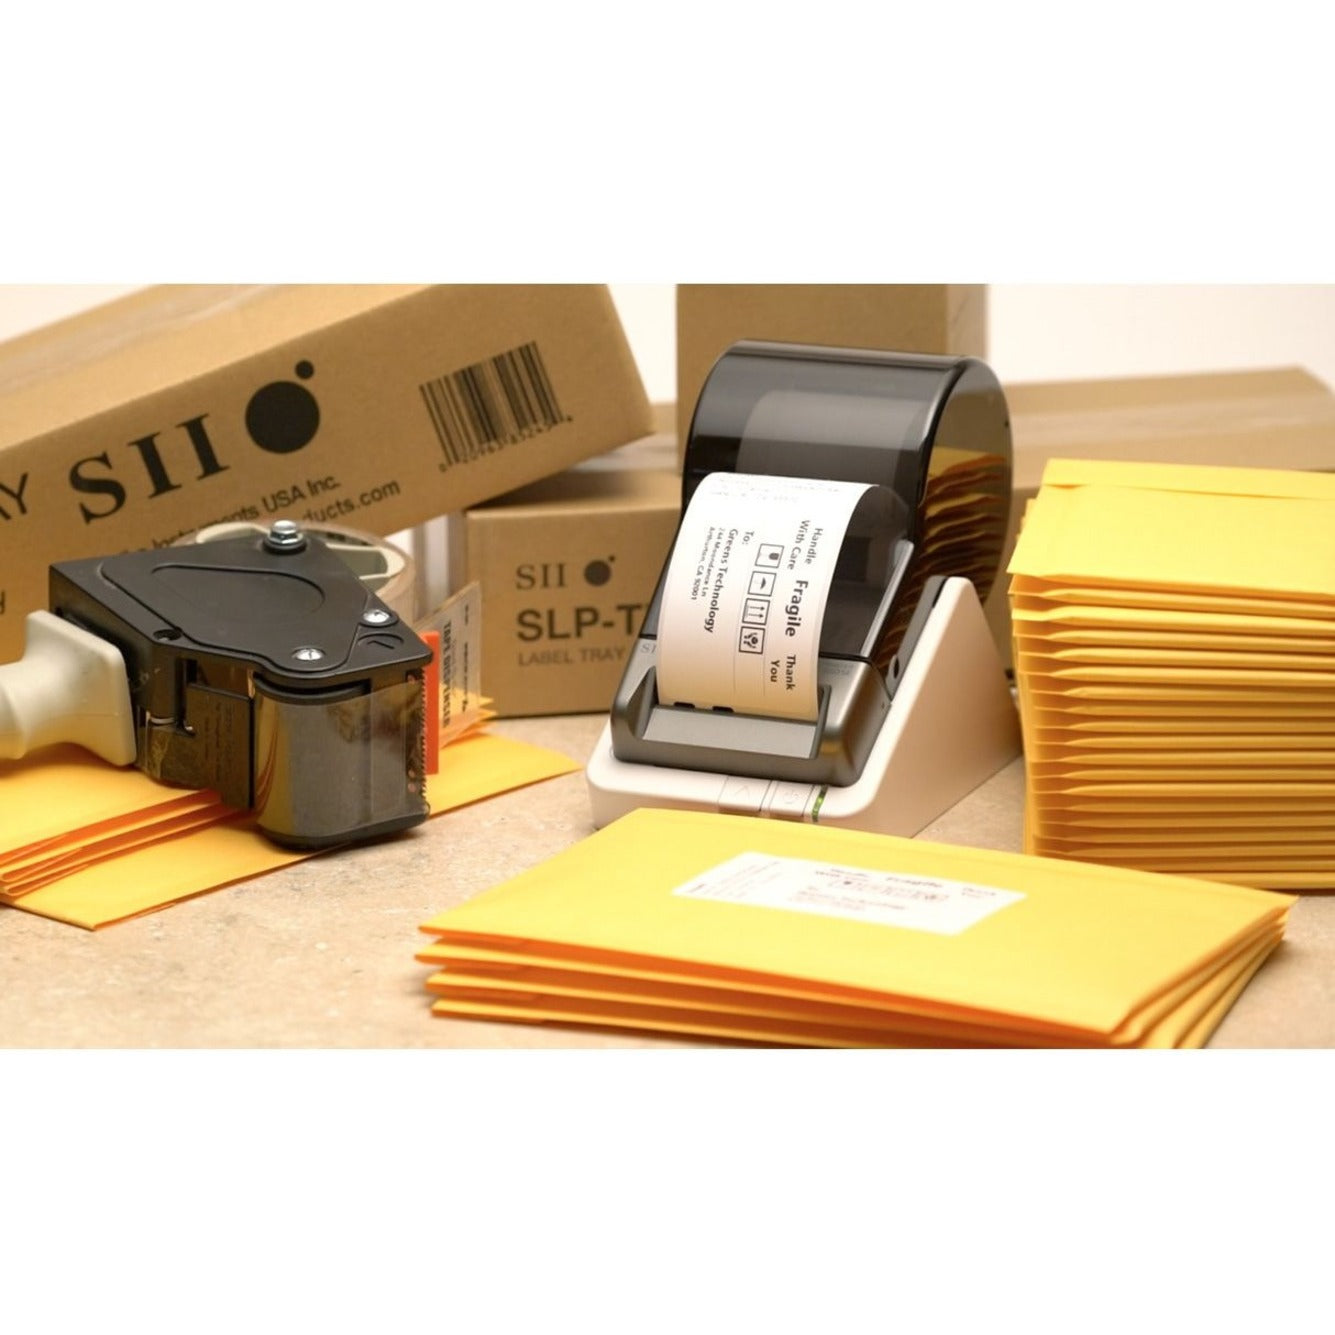 Seiko SLP650 Smart Label Printer, 300dpi, 2.28" Print Width, USB, 3 Year Warranty